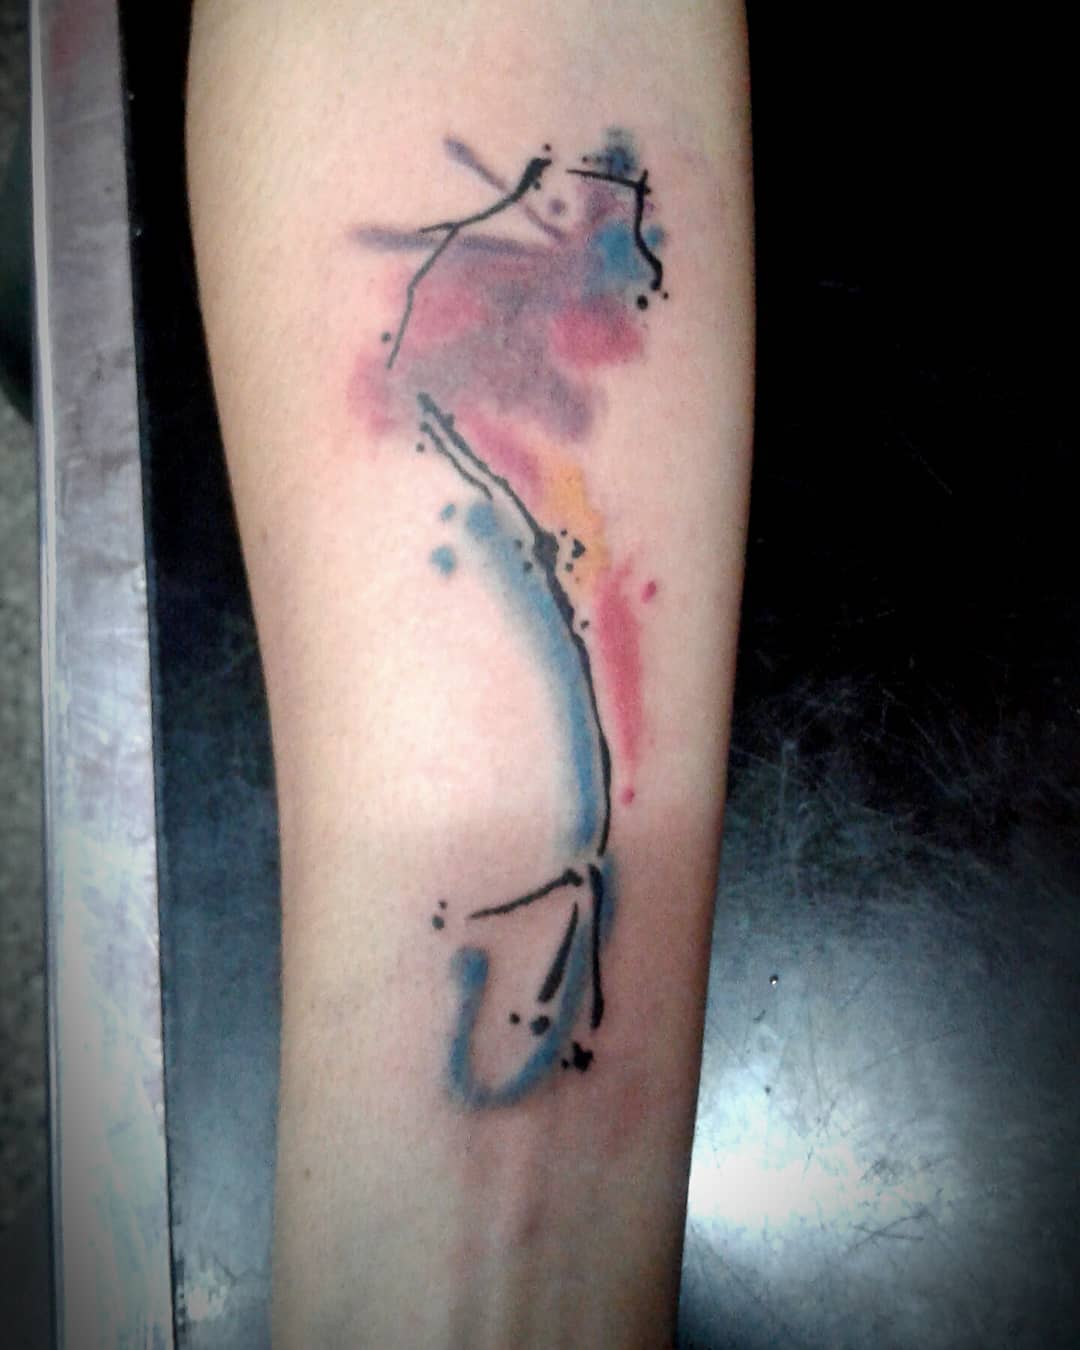 Scorpio Zodiac Symbol Tattooed on inner forearm